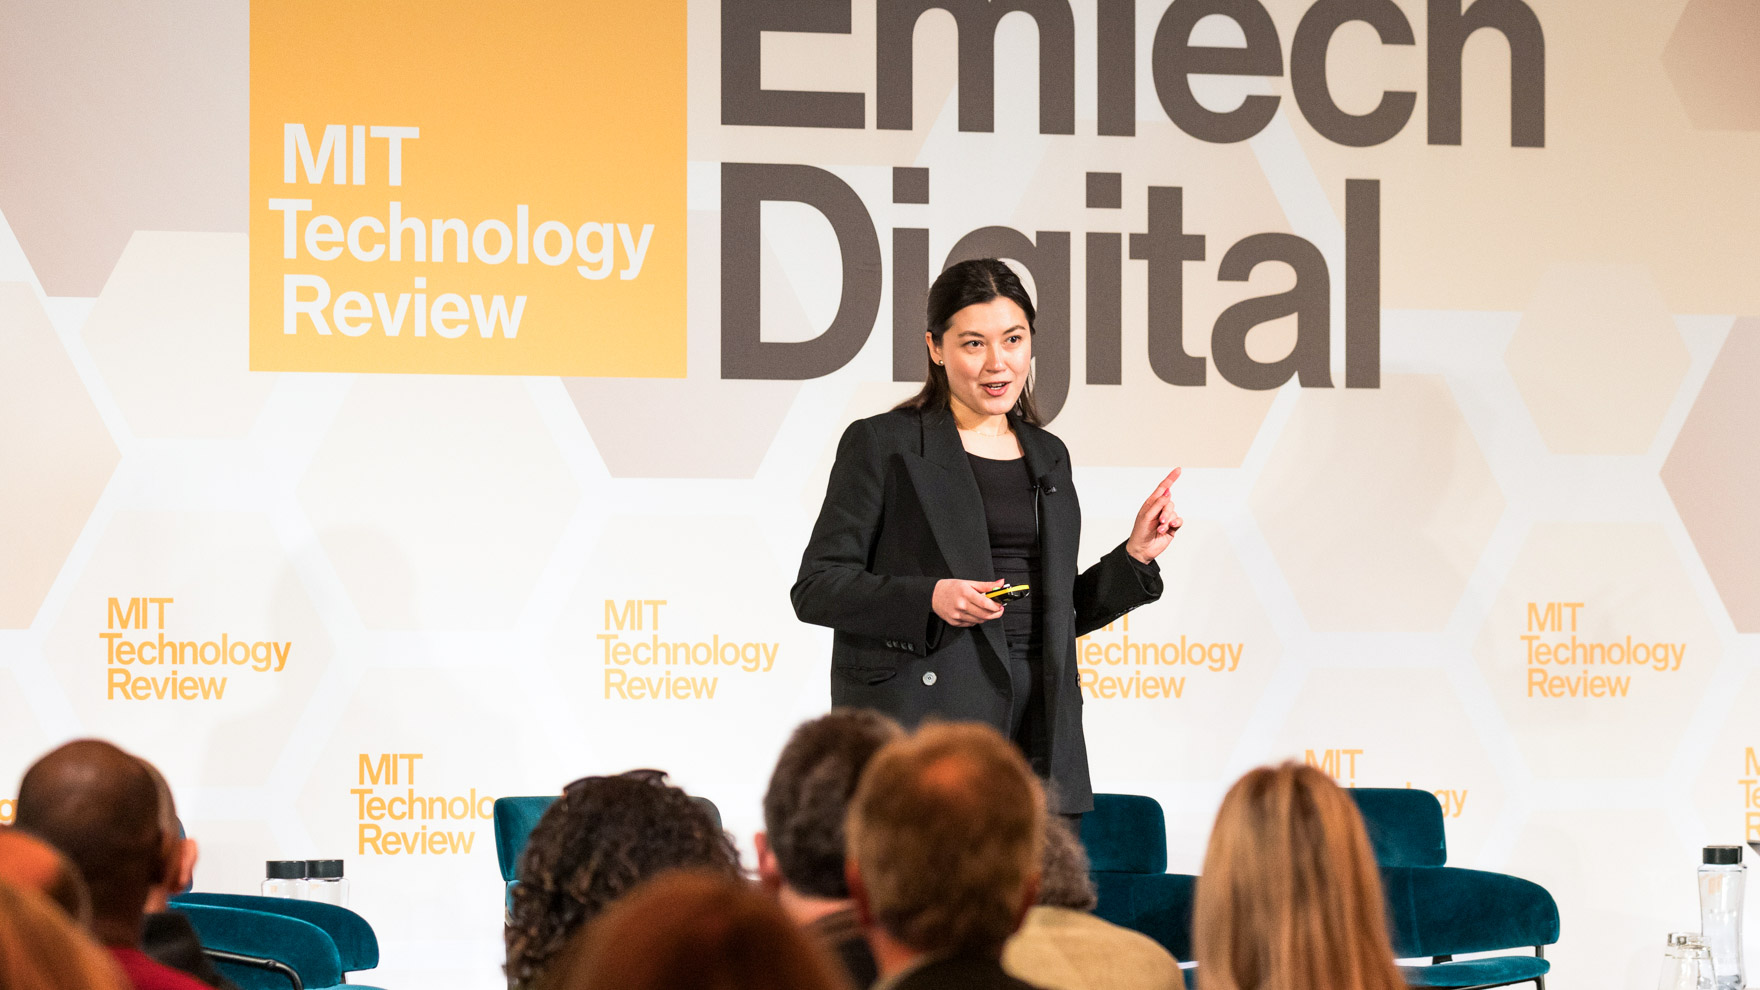 Melissa Heikkilä on stage at EmTech Digital in London